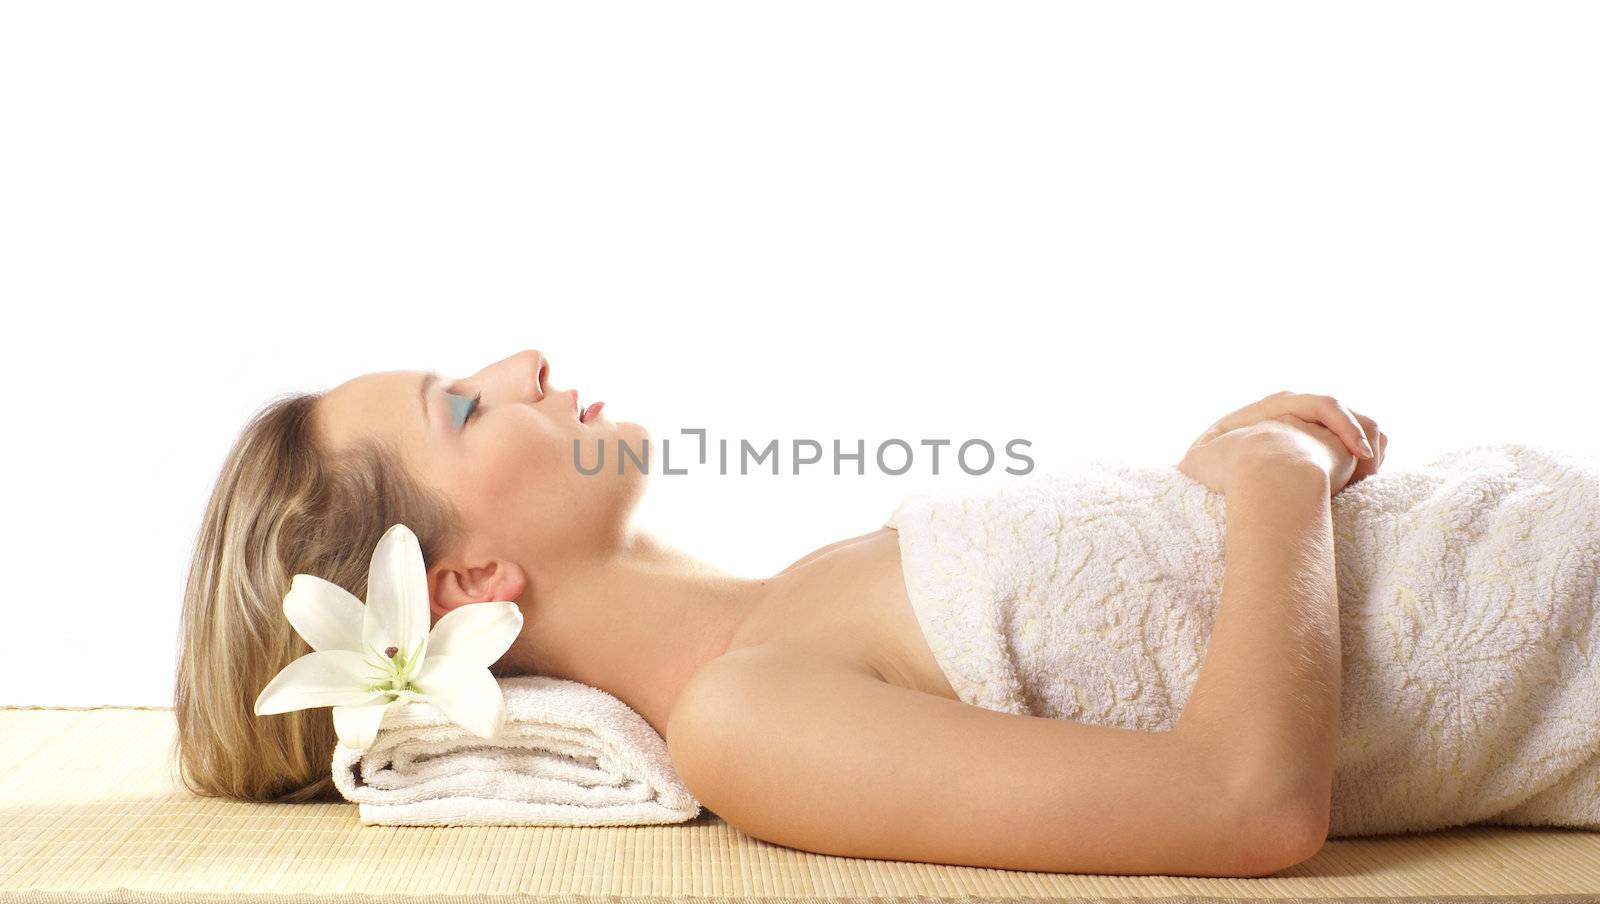 Attractive woman getting spa treatment by shmeljov